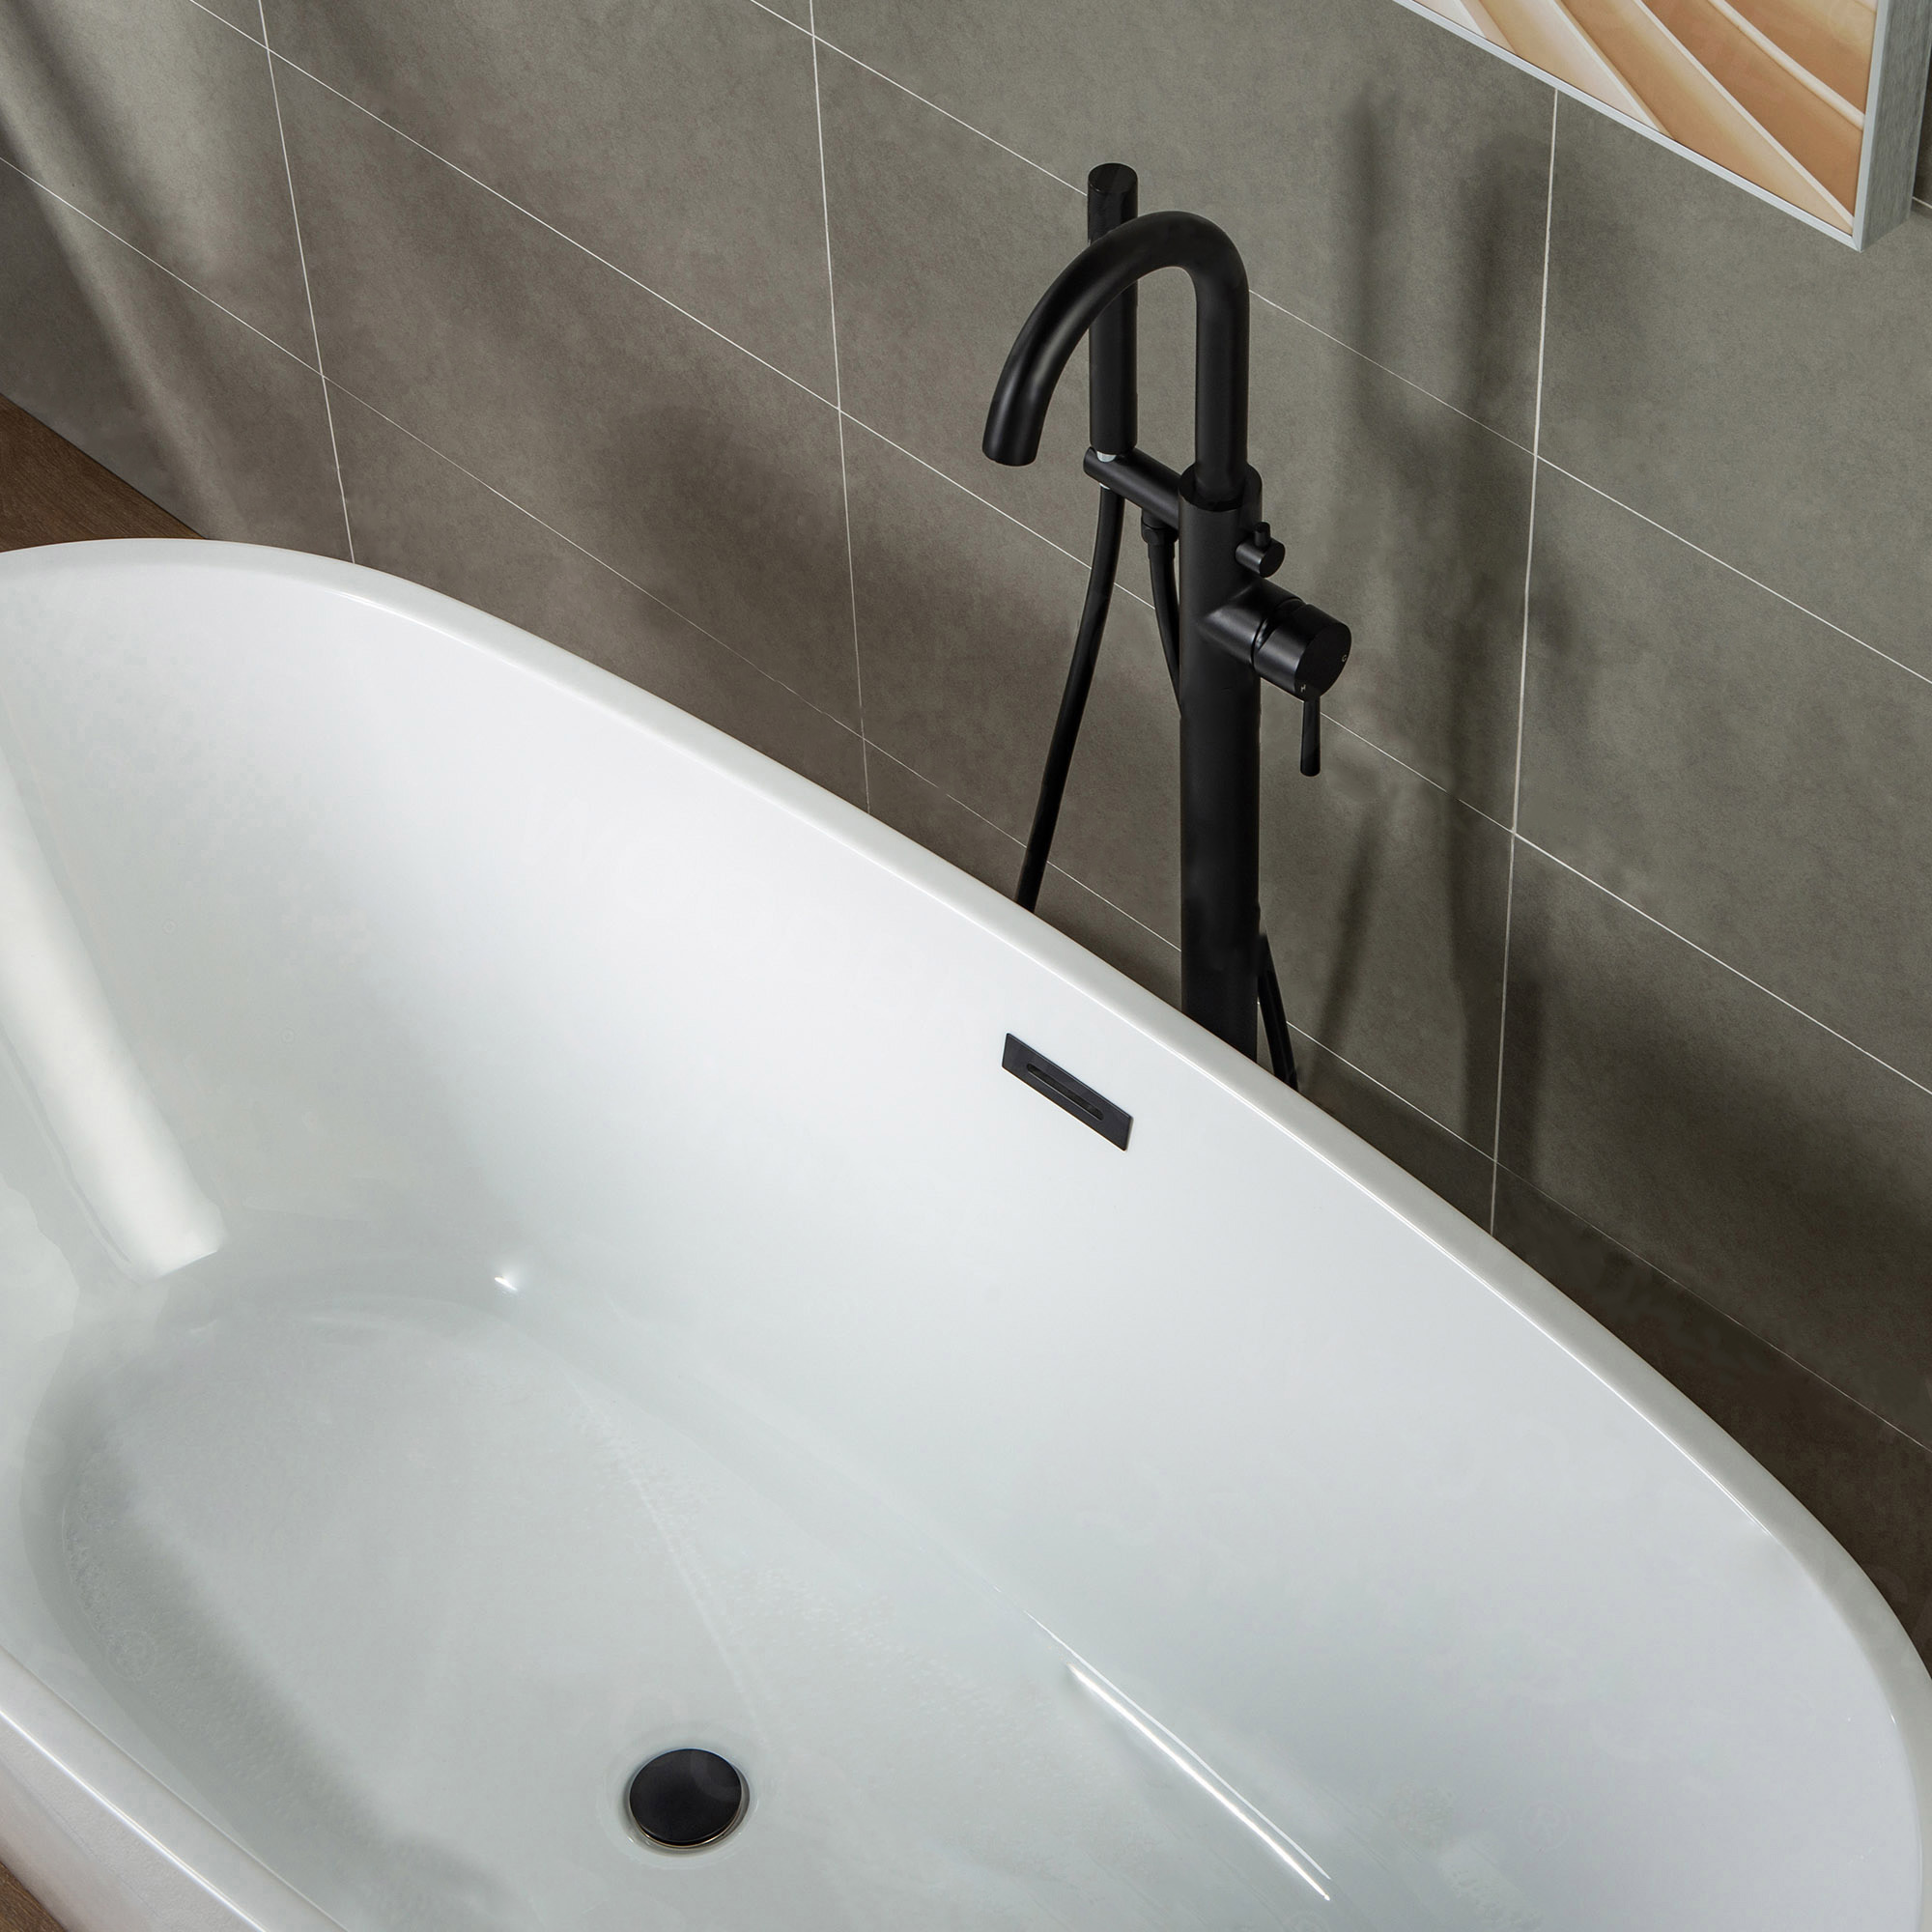  WOODBRIDGE F0006MBDR Contemporary Single Handle Floor Mount Freestanding Tub Filler Faucet with Hand shower in Matte Black Finish._14898